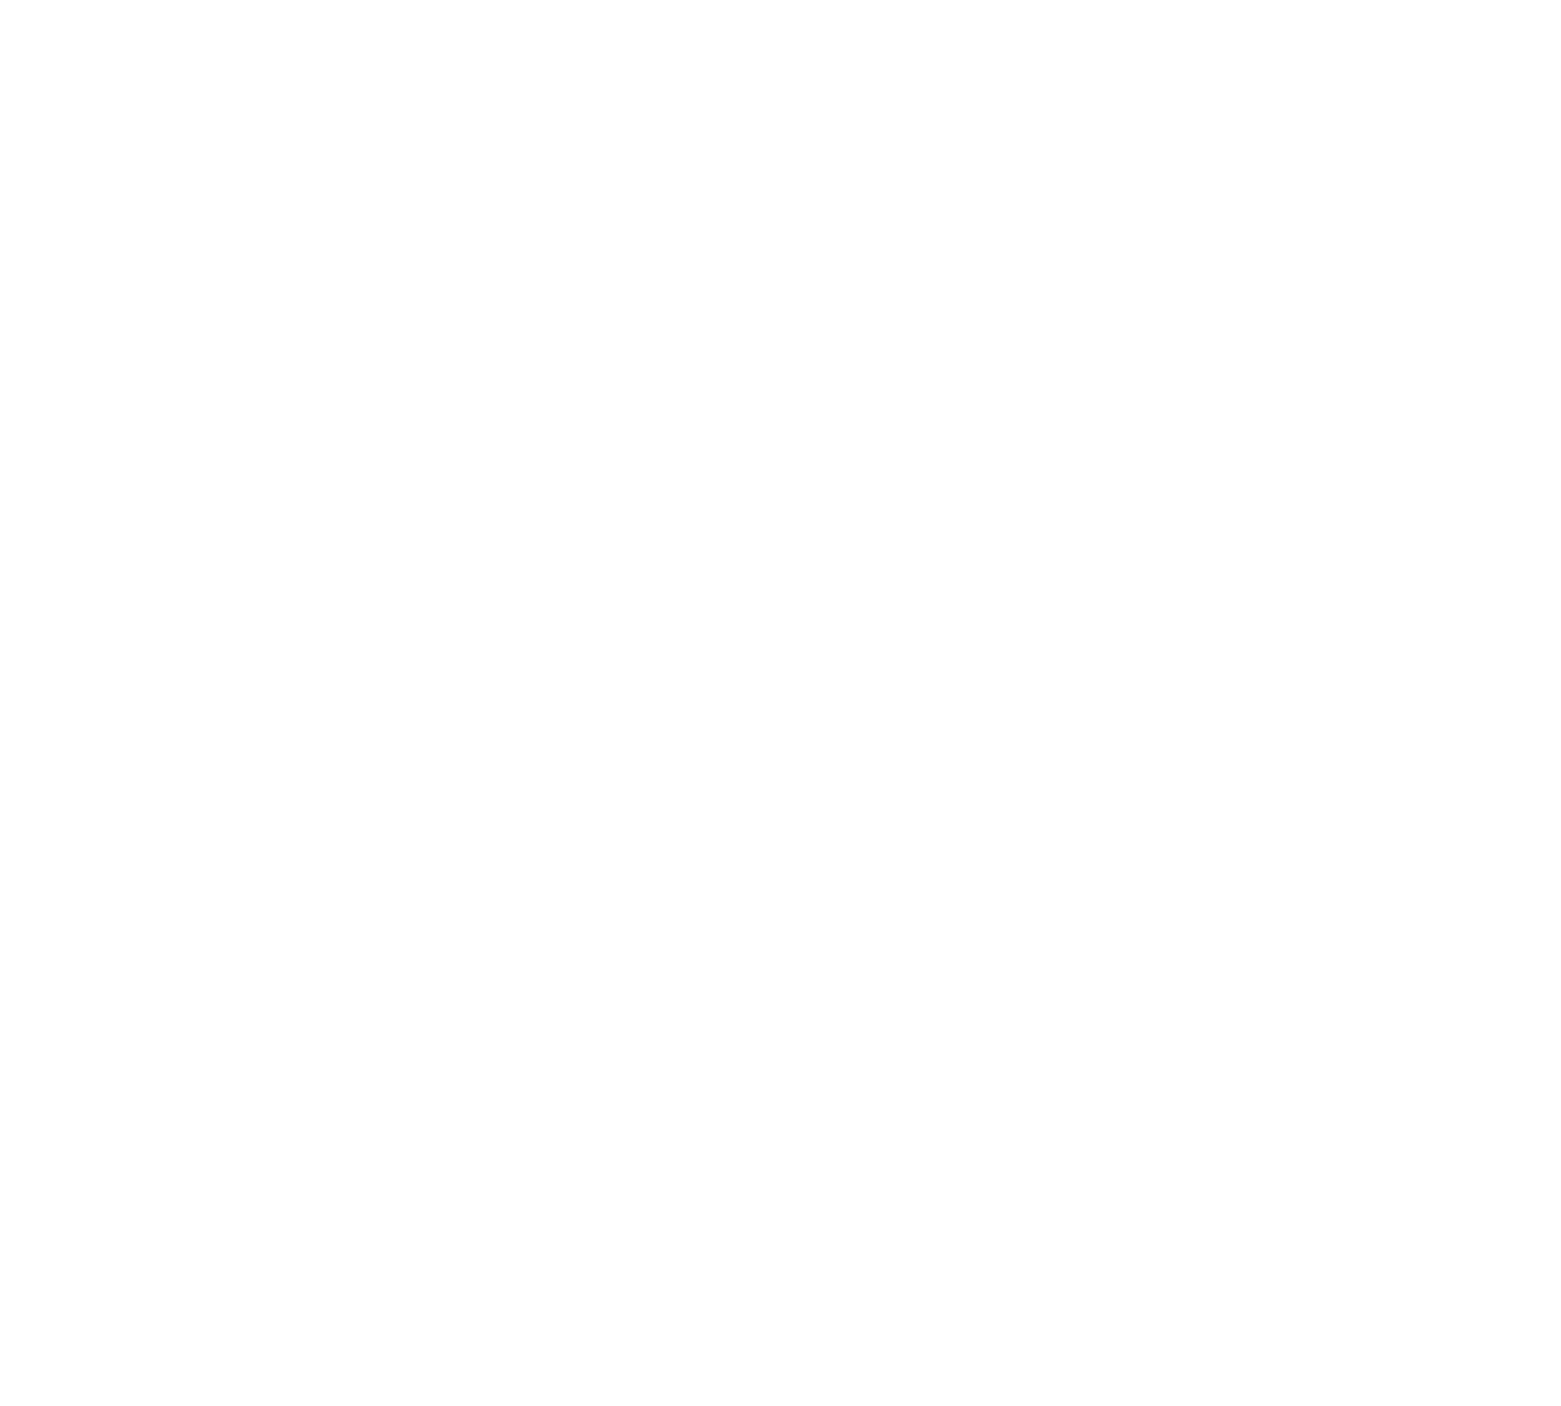 Coupa logo for dark backgrounds (transparent PNG)